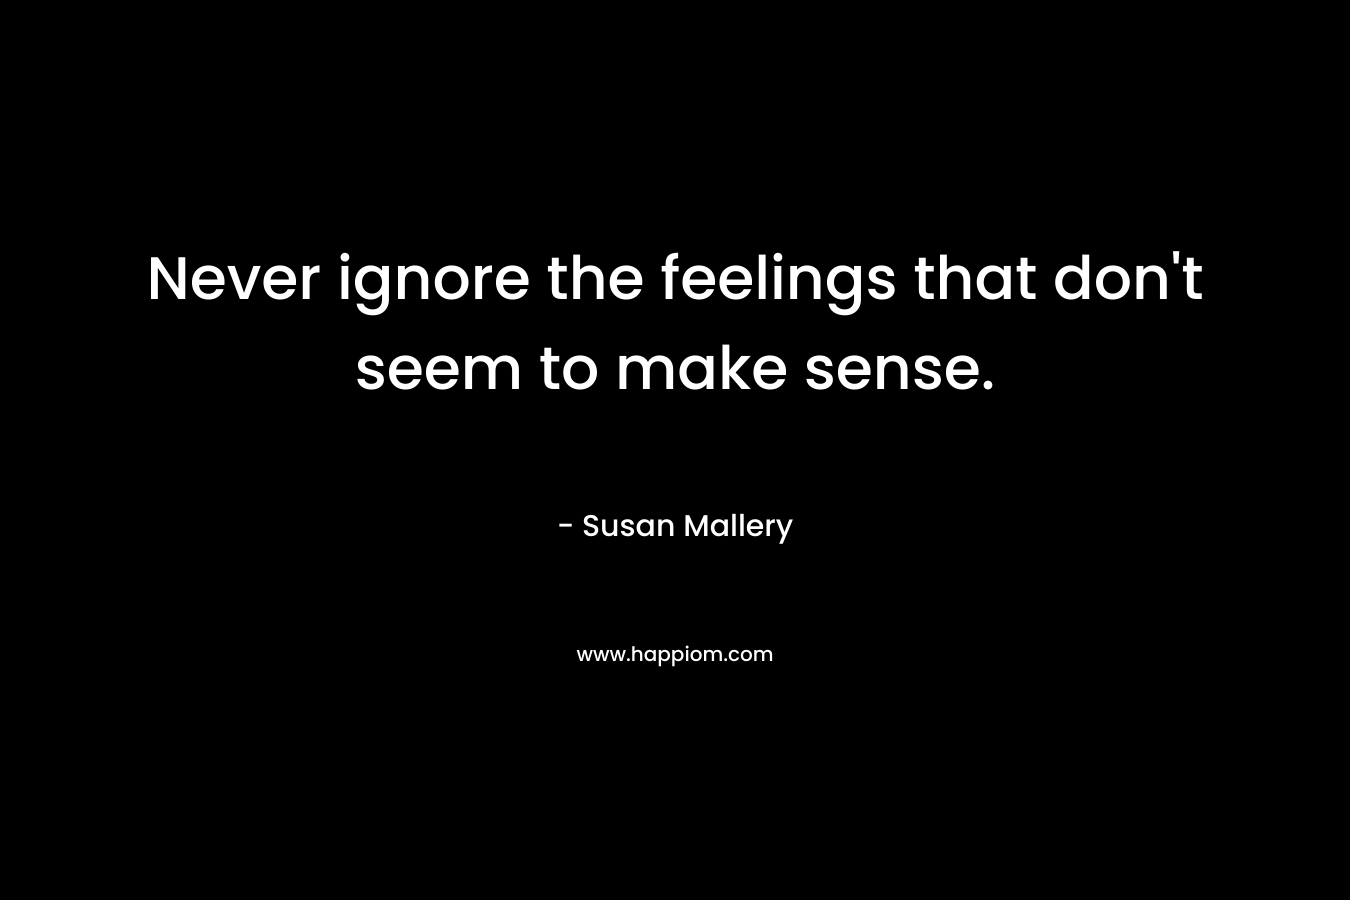 Never ignore the feelings that don't seem to make sense.